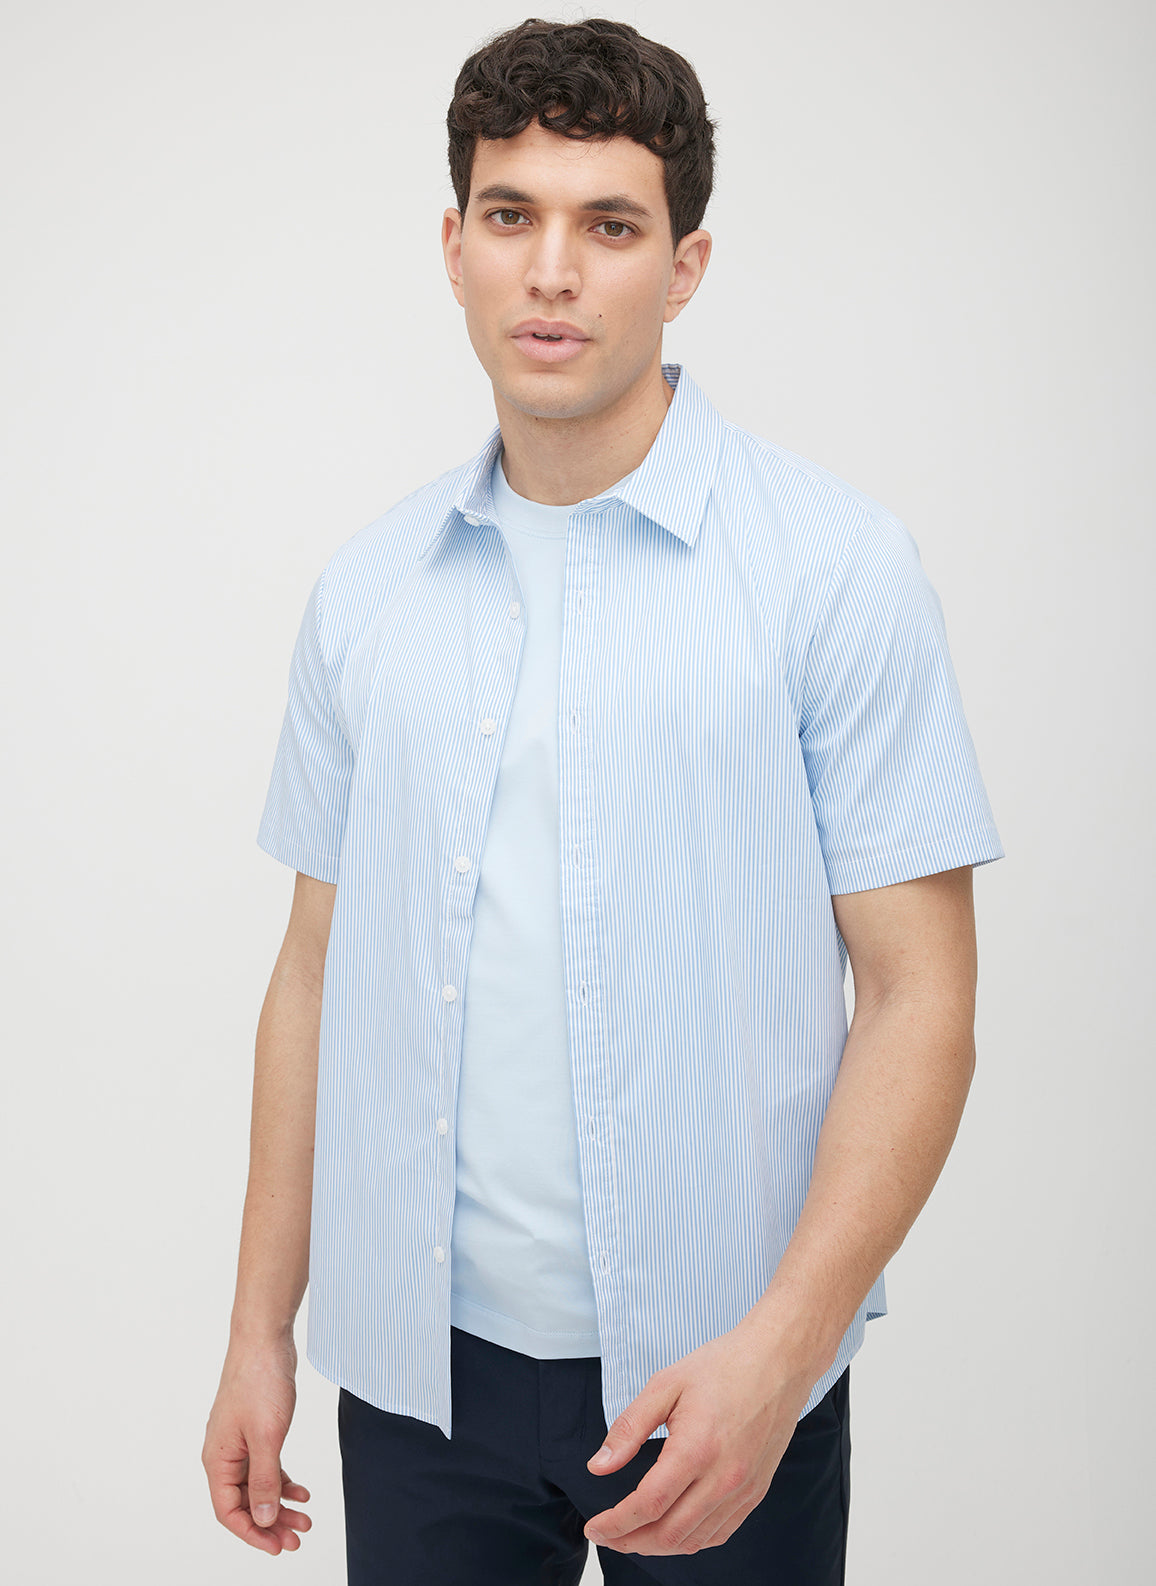 Kit and Ace — Acadia Short Sleeve Poplin Shirt